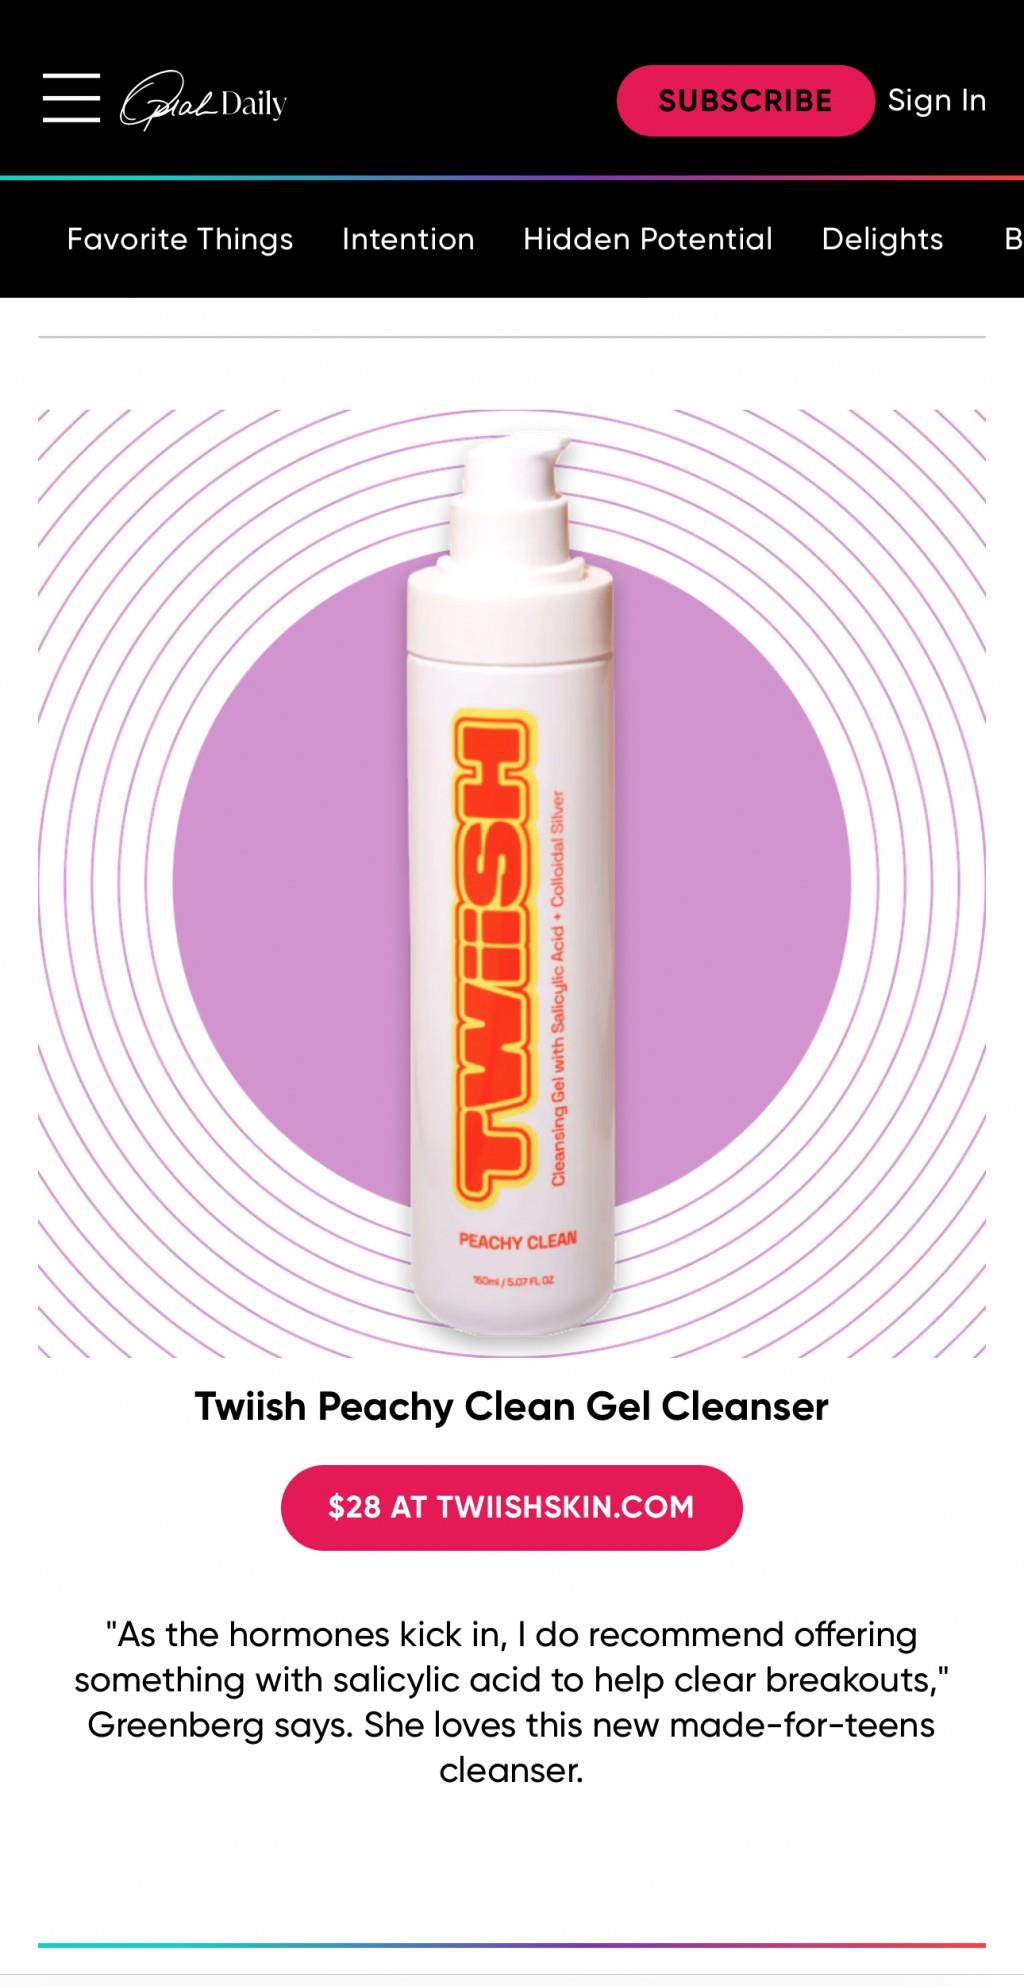 Oprahdaily Names Twiish Peachy Clean Gel Cleanser One The Best Makeup Gifts For Tweens